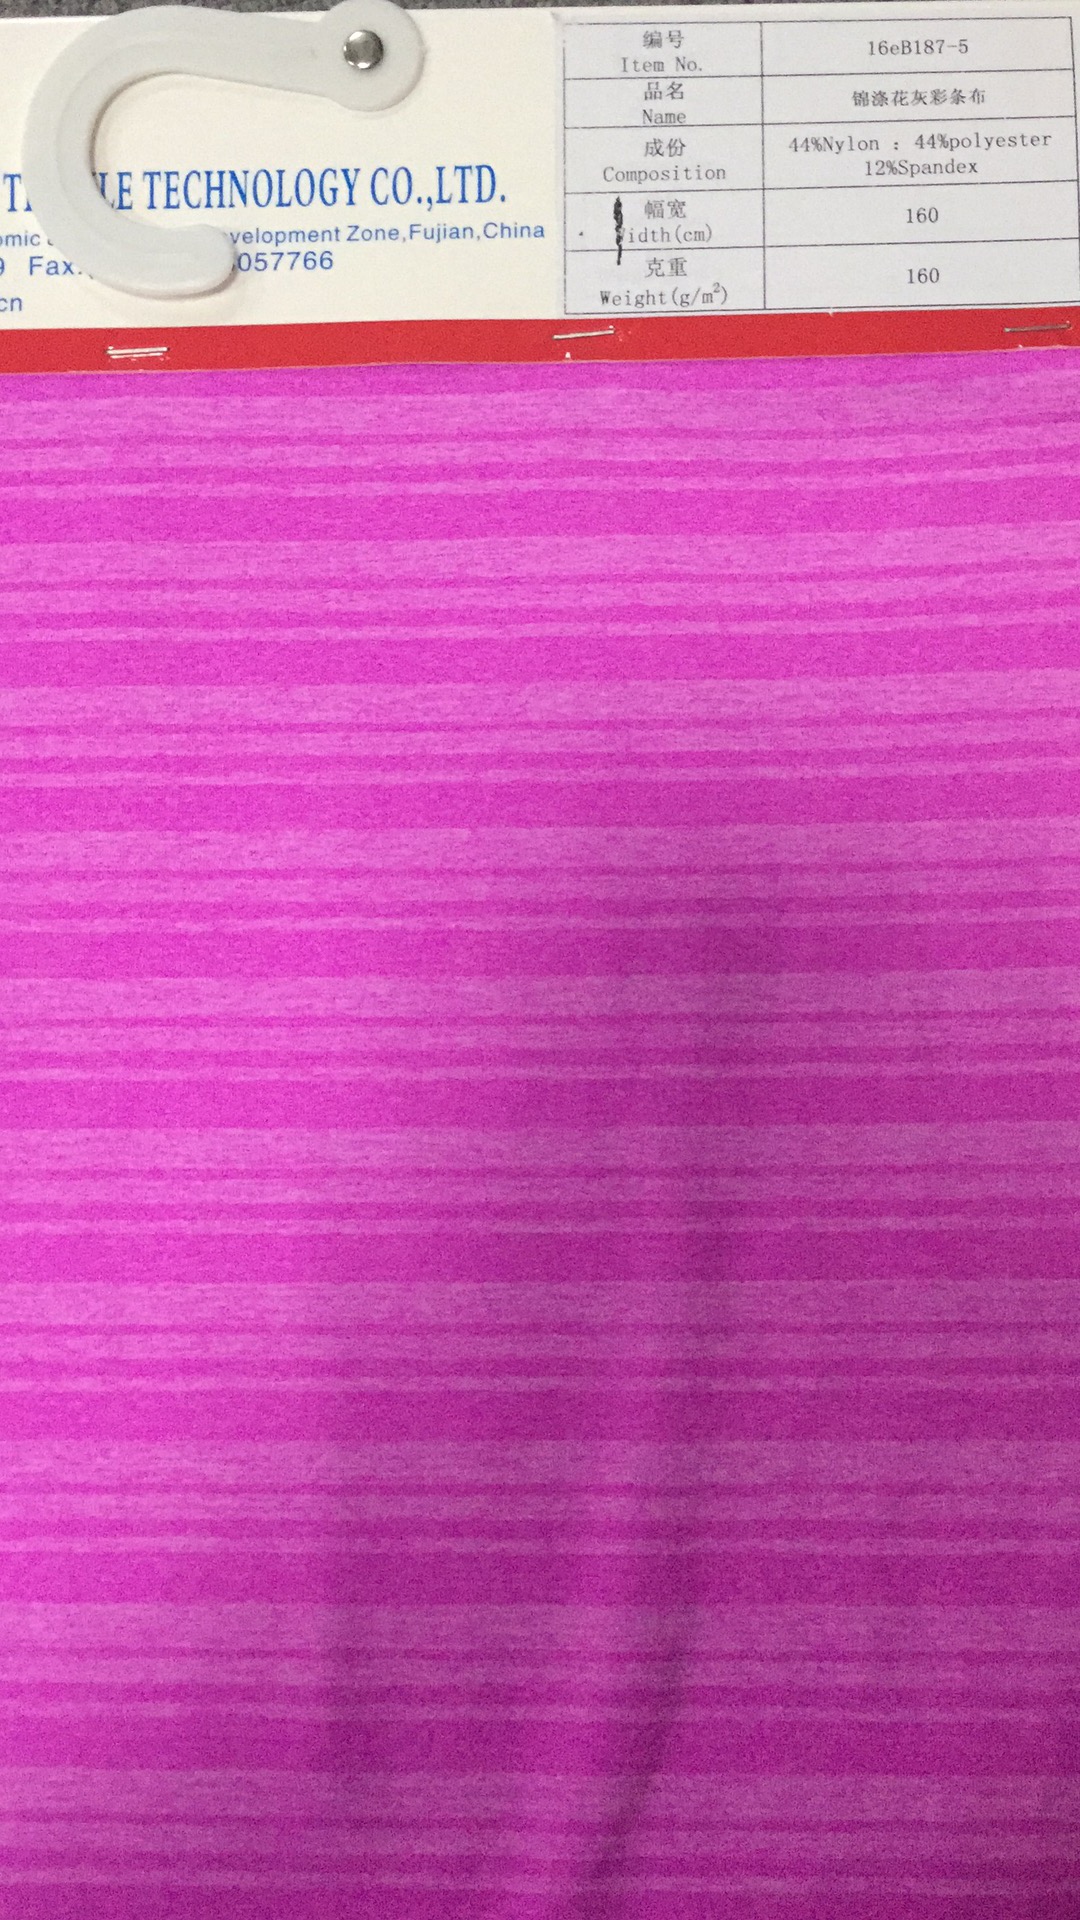 16eB187-5 44%Nylon 44%Polyester 12%Spandex Stripe for Yoga Fitness160cmX160gm2